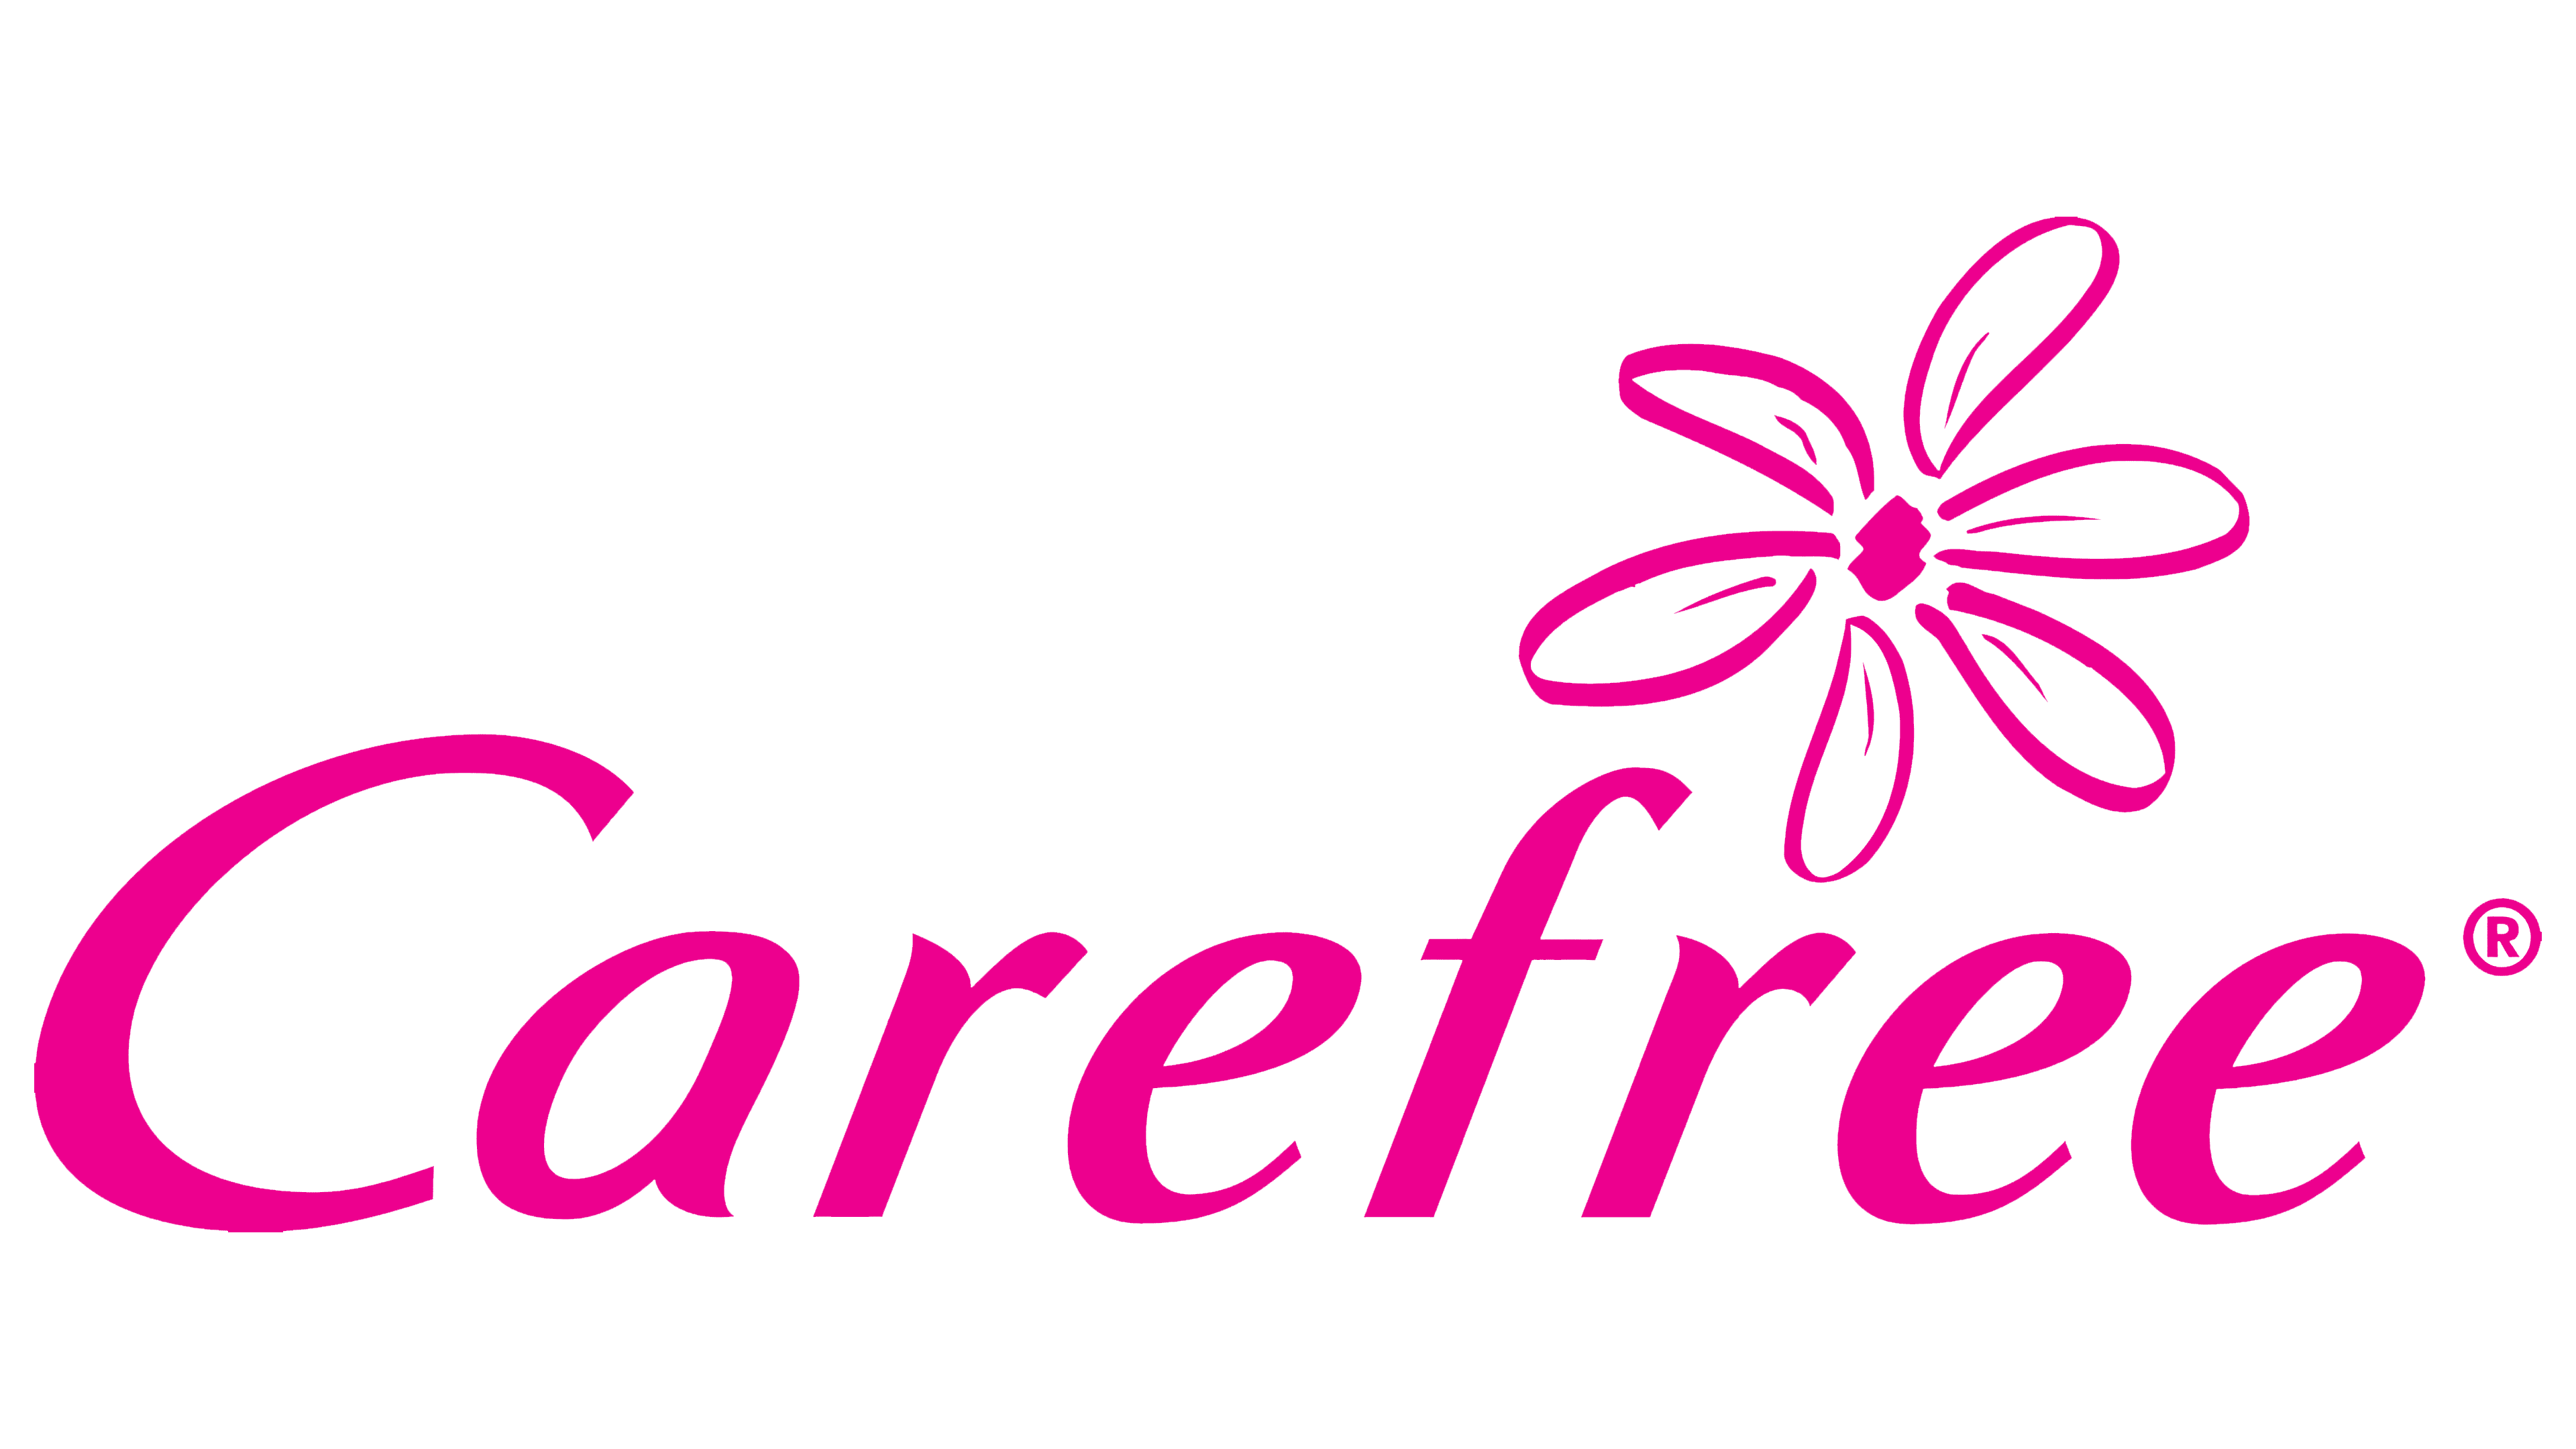 Carefree-Logo-2004-2011.png | صيدلية ادم اونلاين